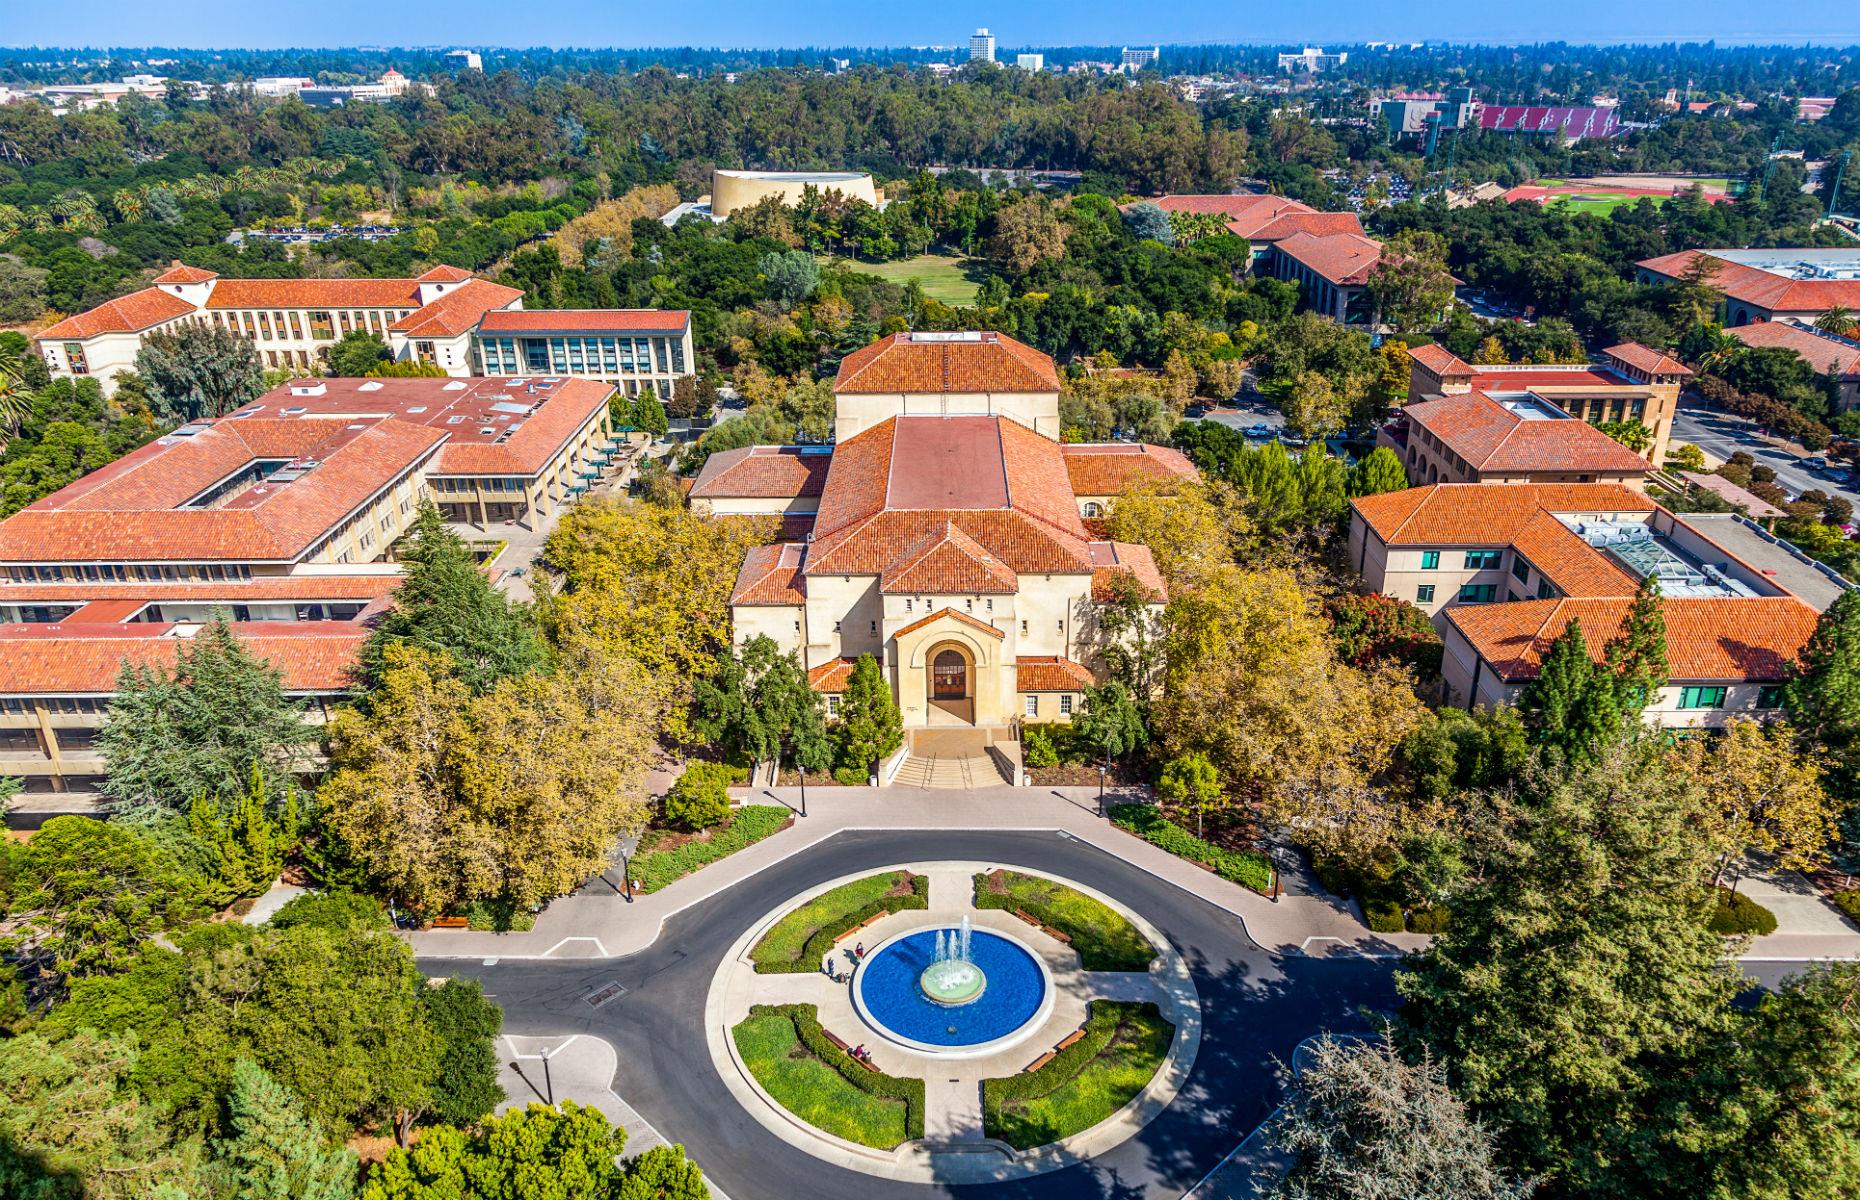 3rd – Stanford University, US